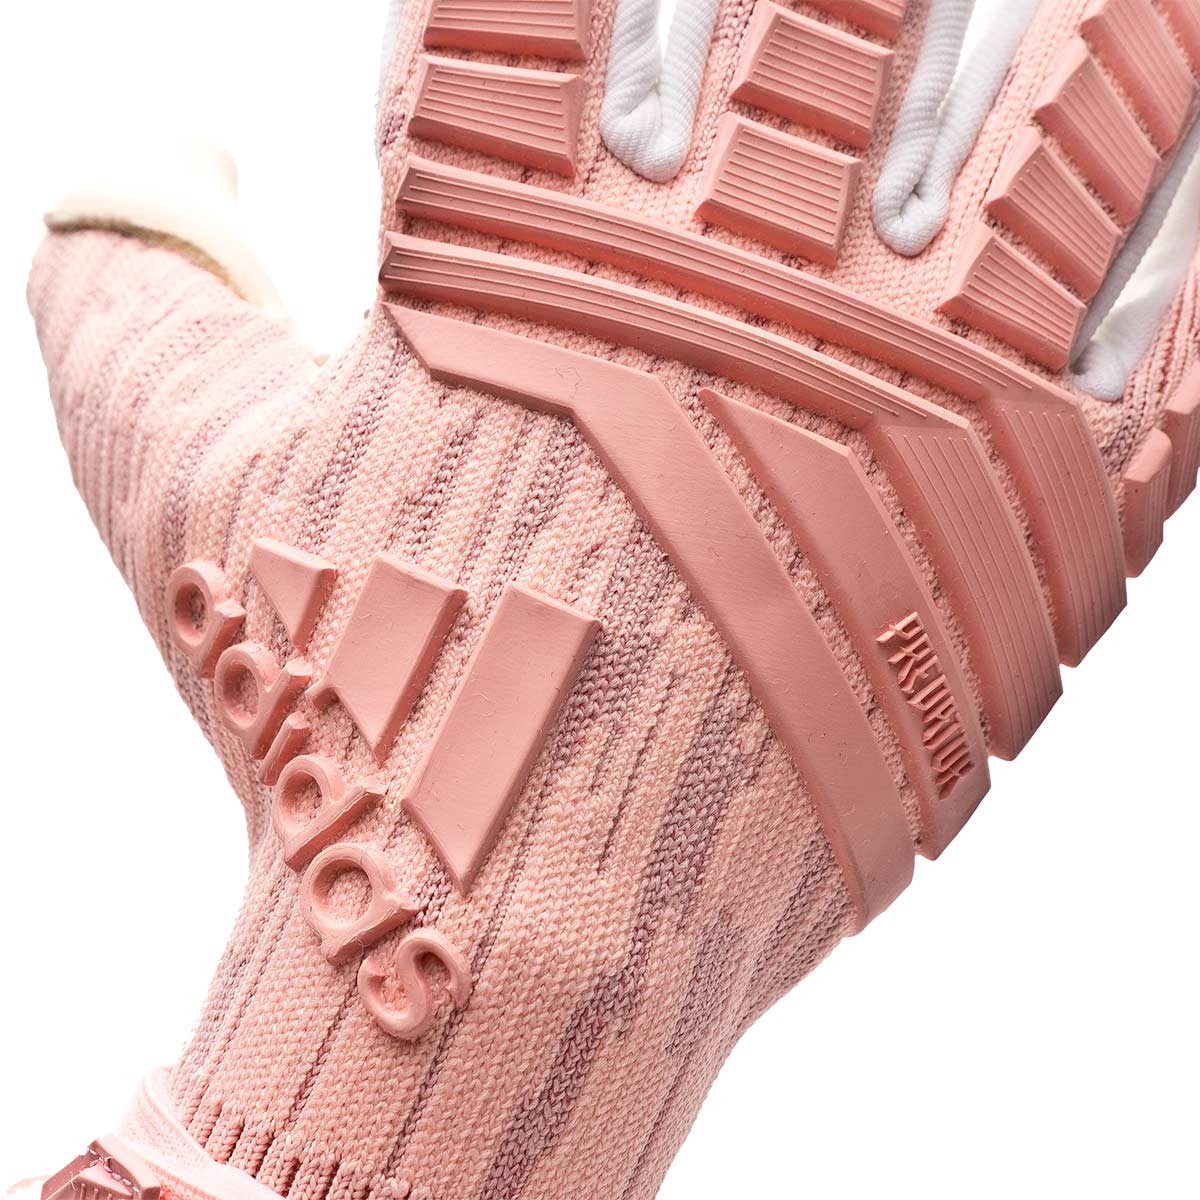 adidas predator trace pink